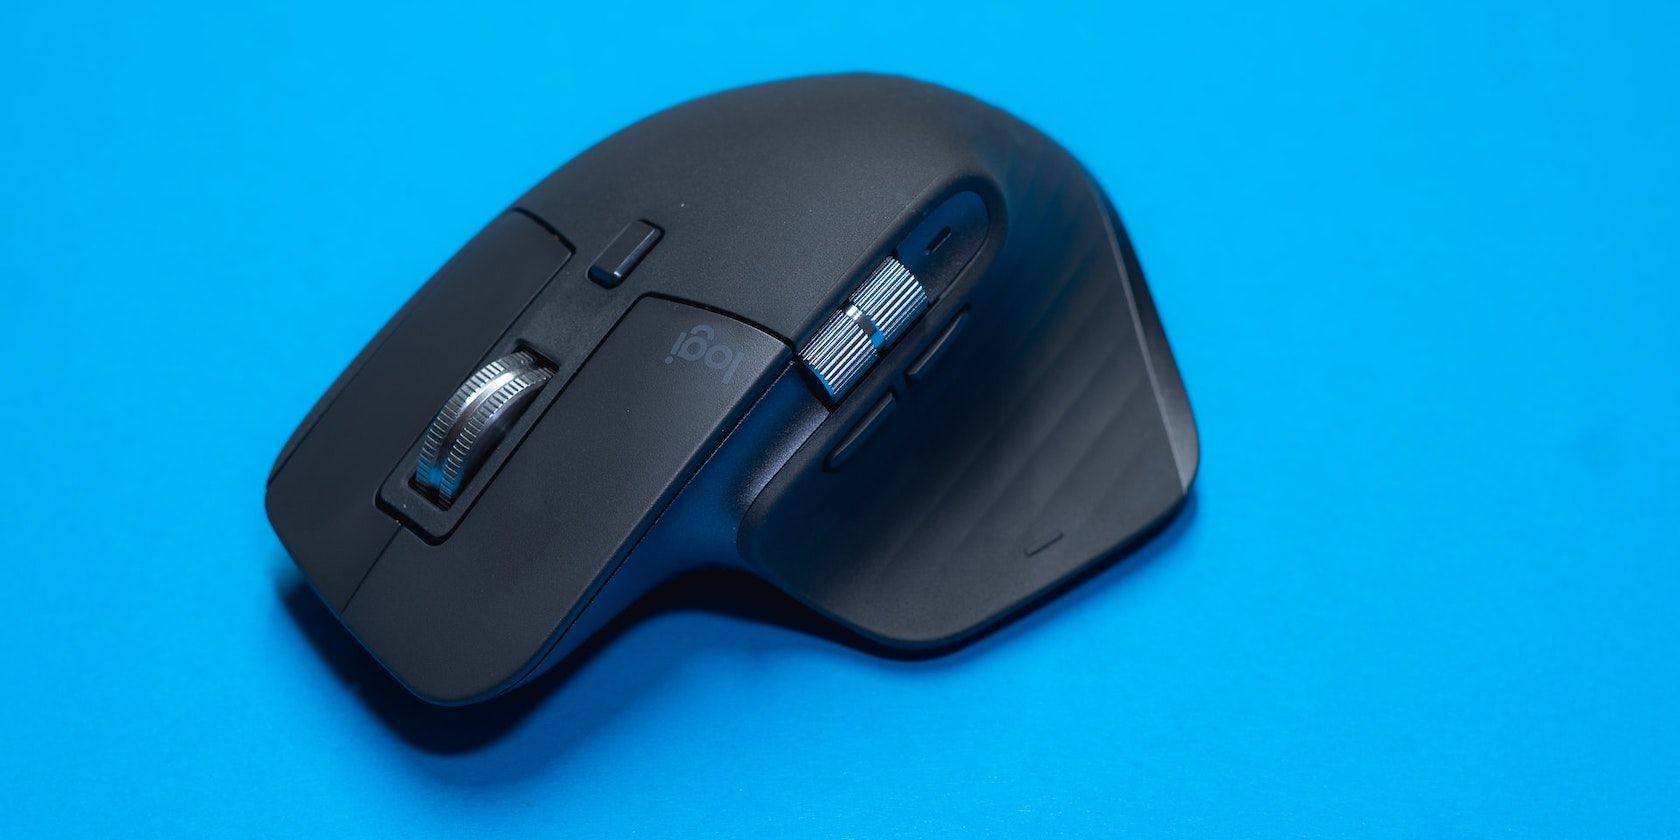 A close up shot of the Logitec MX Master 3 mouse.